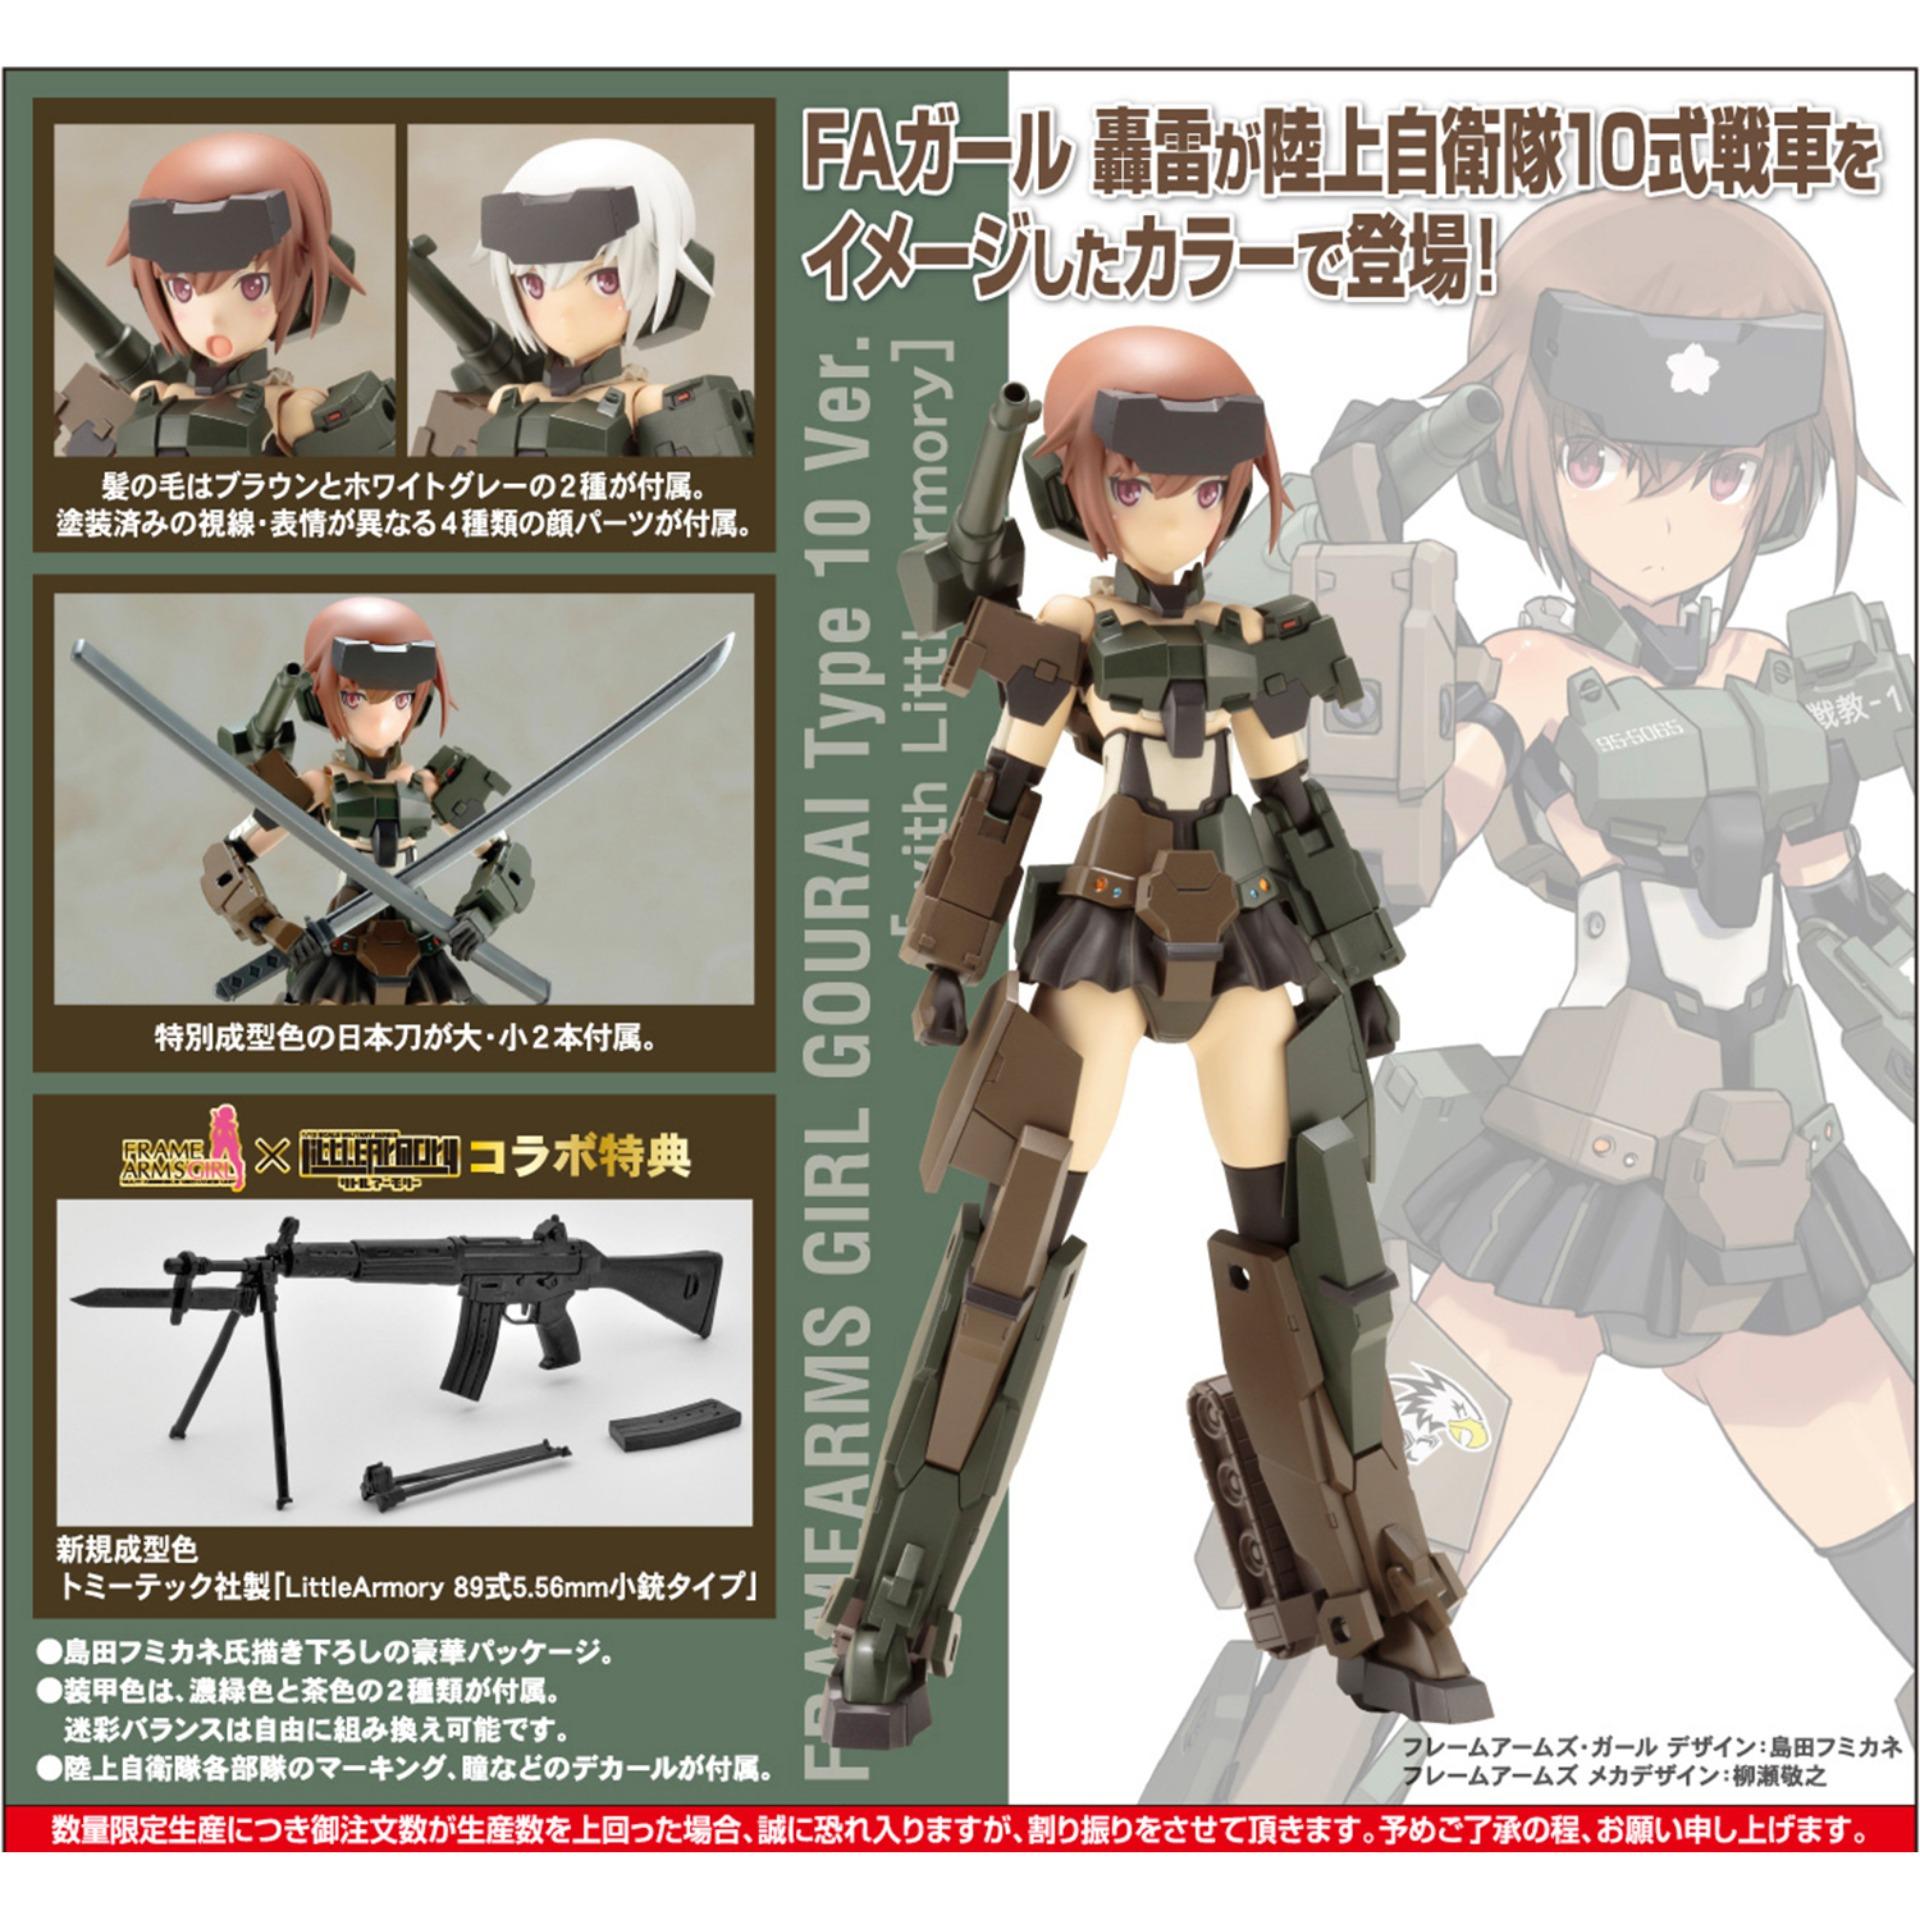 Model โมเดล งานแท้ 100% Kotobukiya Frame Arms Girl Gourai Type 10 Ver Figma ฟิกม่า Anime ขยับแขน-ขาได้ ของขวัญ Gift ของสะสมหายาก อนิเมะ การ์ตูน มังงะ Doll ตุ๊กตา สั่งและนำเข้าจากญี่ปุ่น manga Figure ฟิกเกอร์